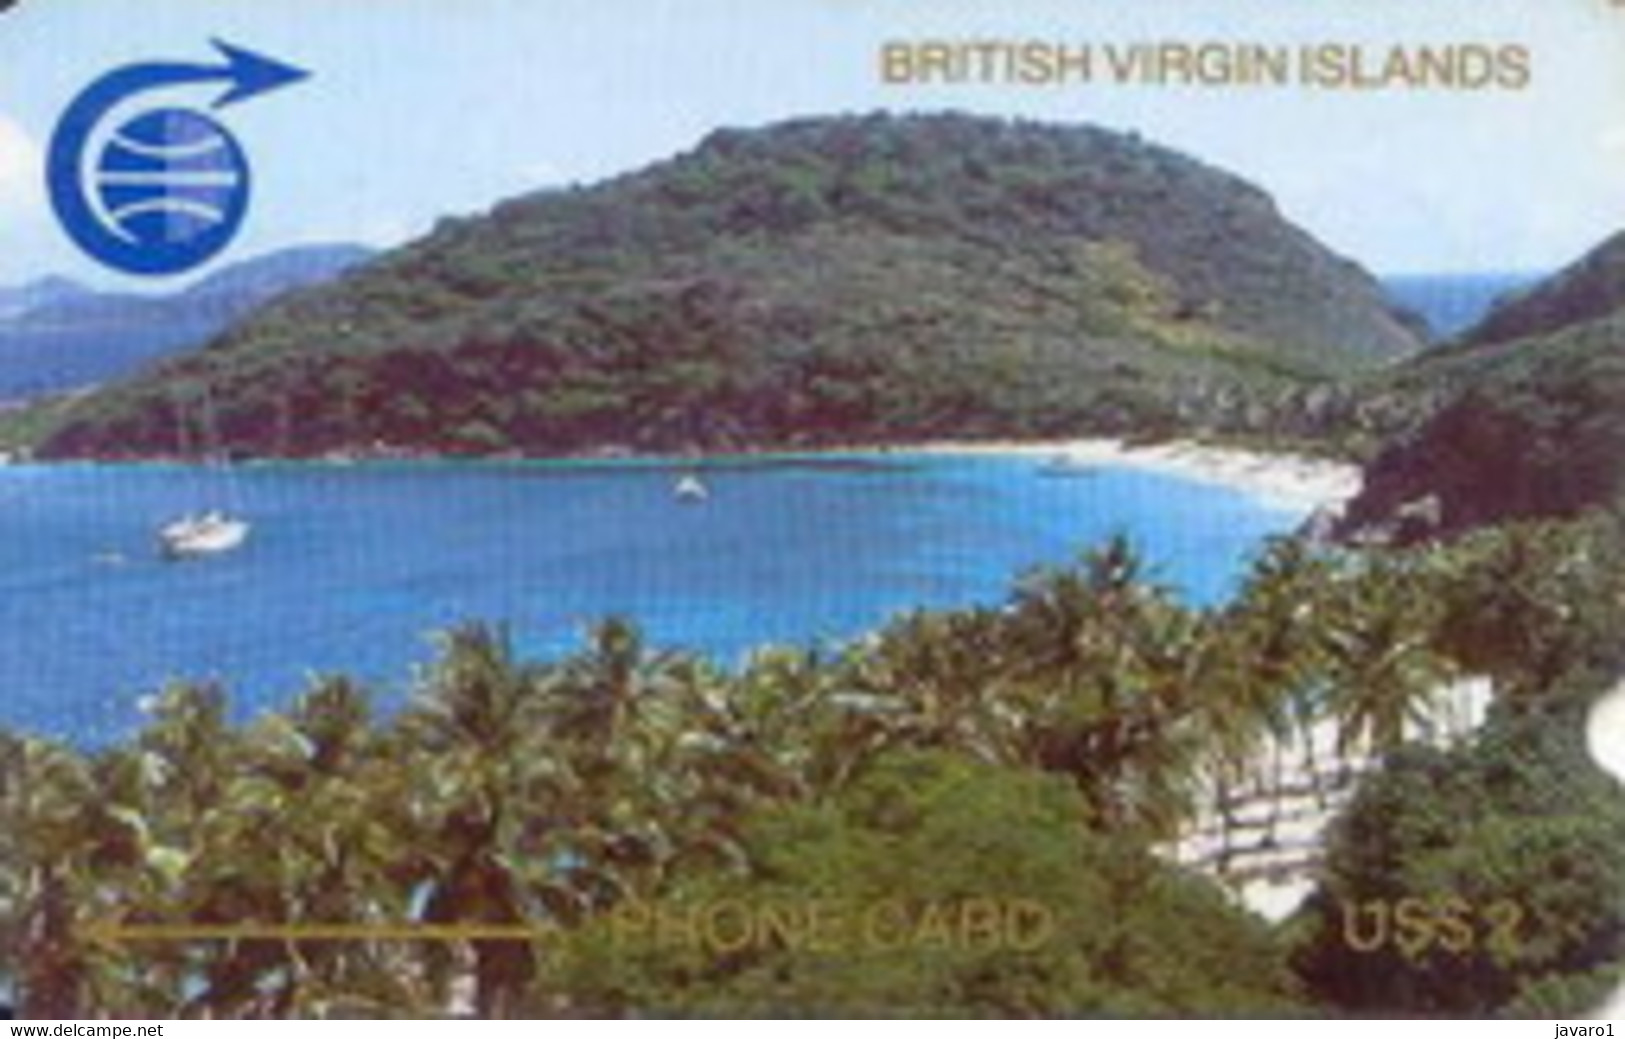 BVI : 001C US$10 (Large Notch) MINT - Virgin Islands